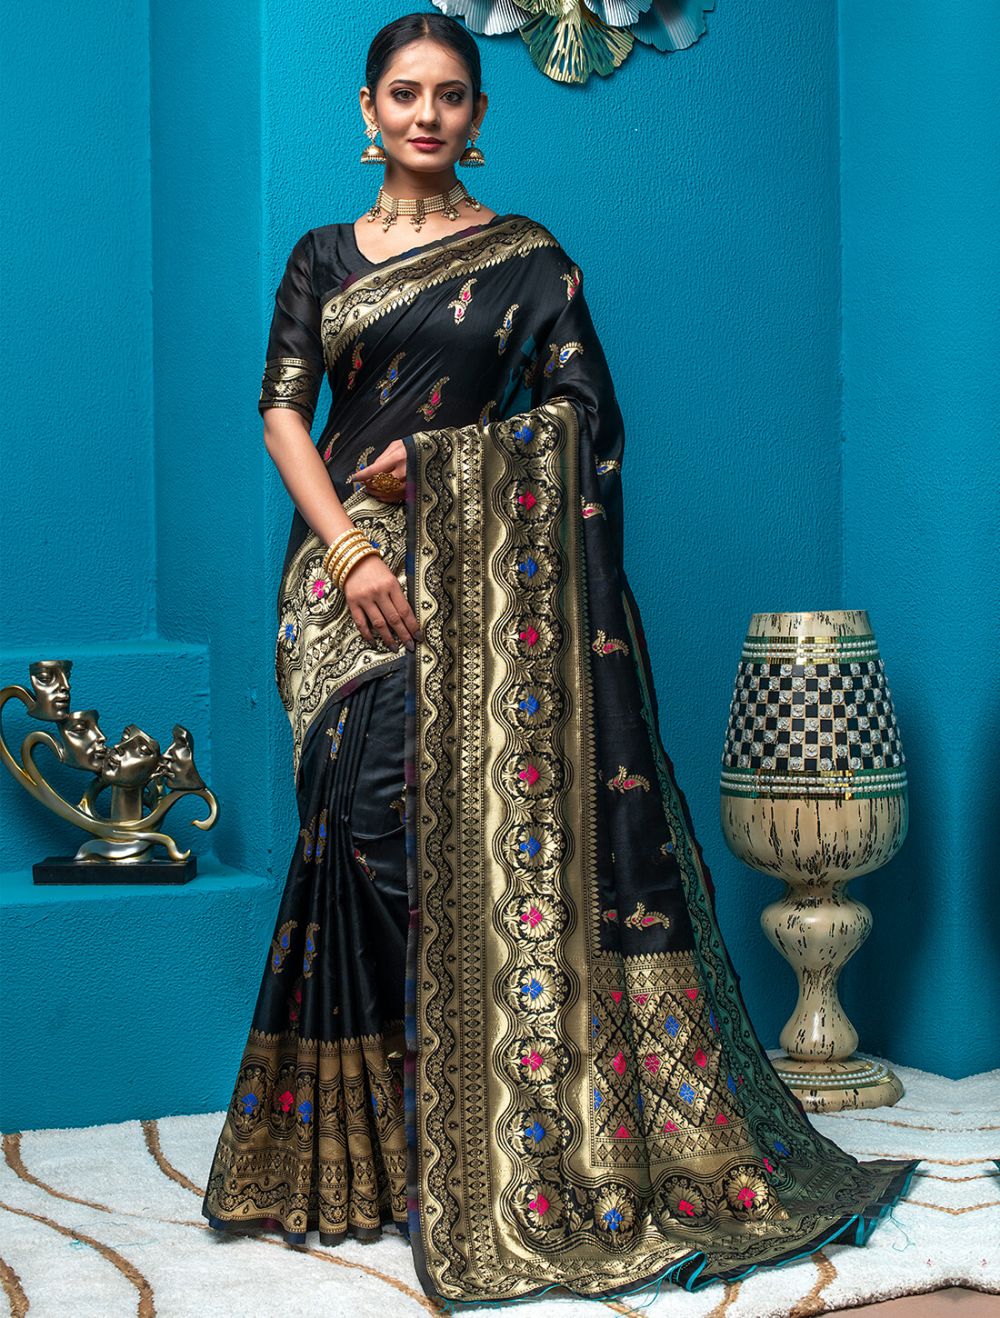 Royal Blue - Sari (Saree) Petticoat - Available in S, M, L & XL - Unde